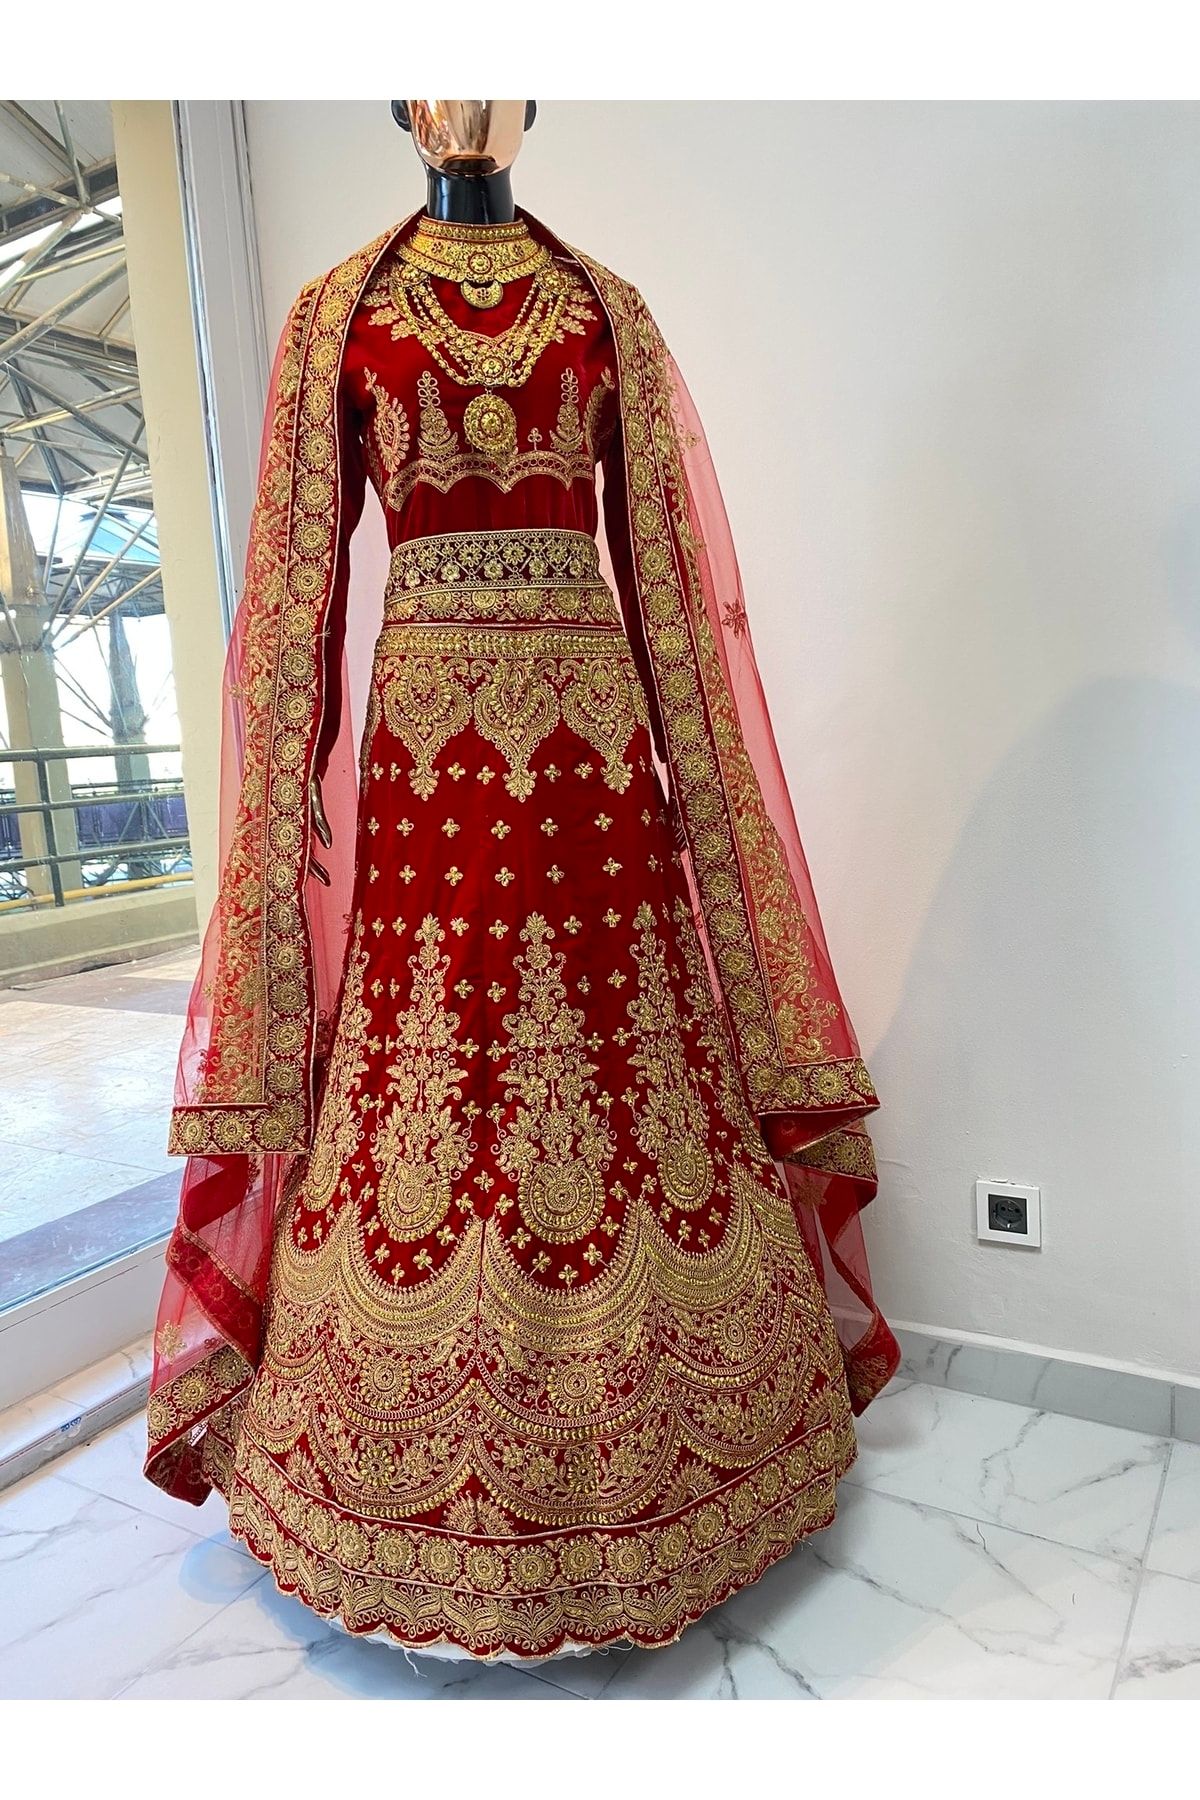 Aashiv's Collection Hint Elbisesi Kına Elbisesi